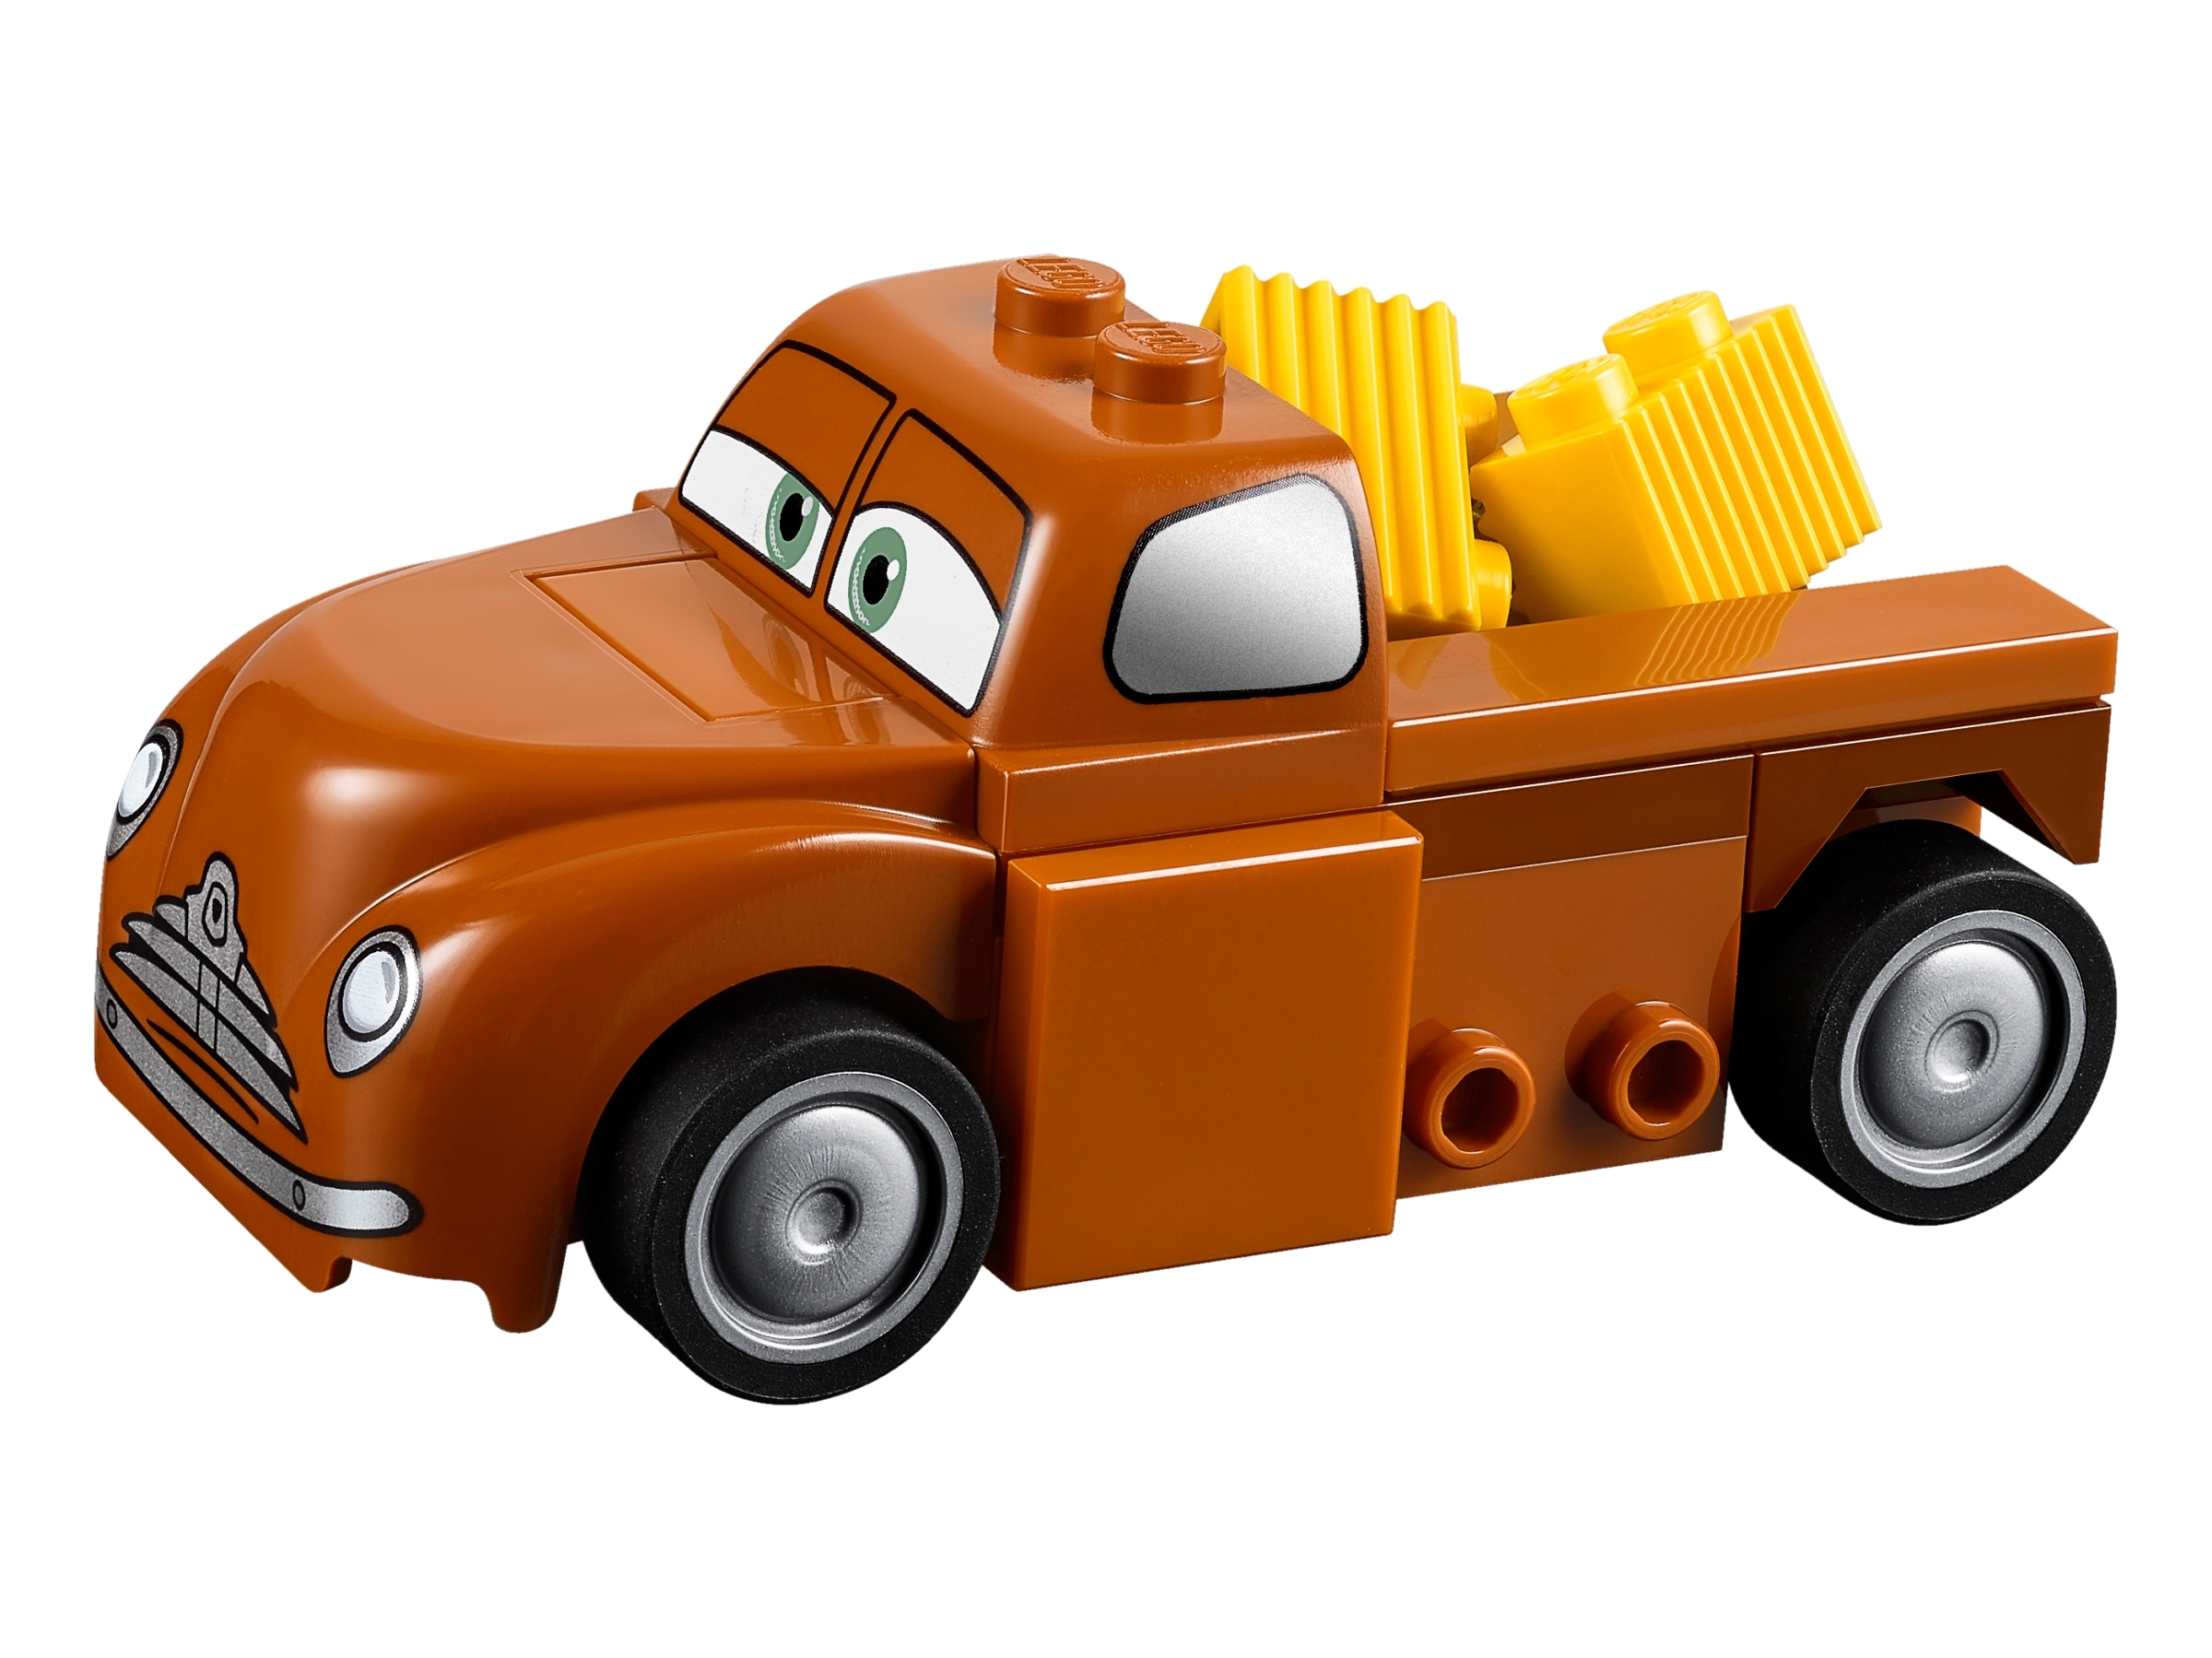 10743 LEGO Juniors Disney Cars Smokey's Garage 116 Pcs Factory Sealed New in Box 